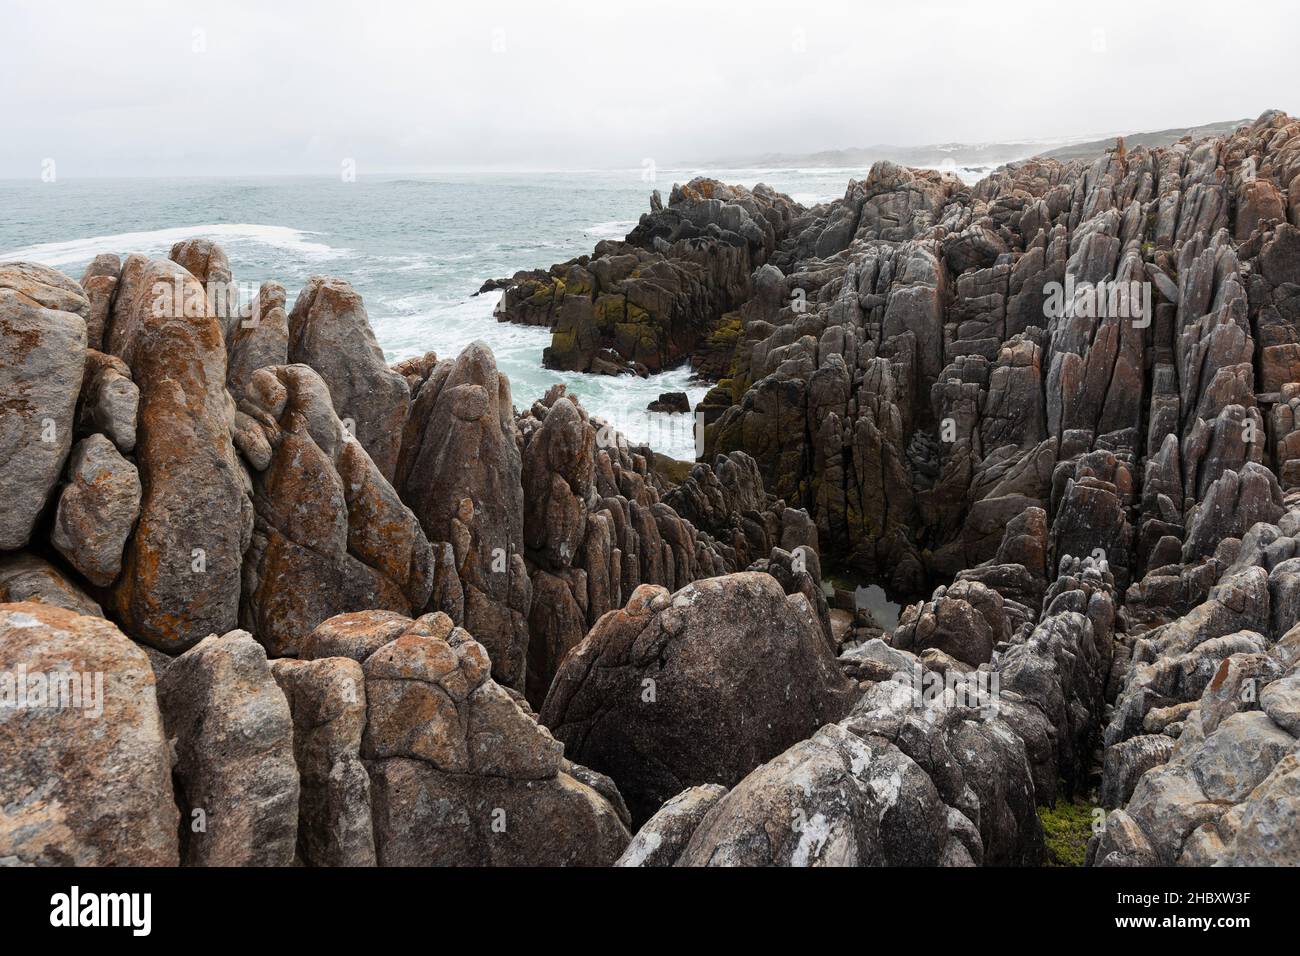 Jagged rocks and the rocky coastline of the Atlantic at De Kelders beach, waves breaking on shore. Stock Photo